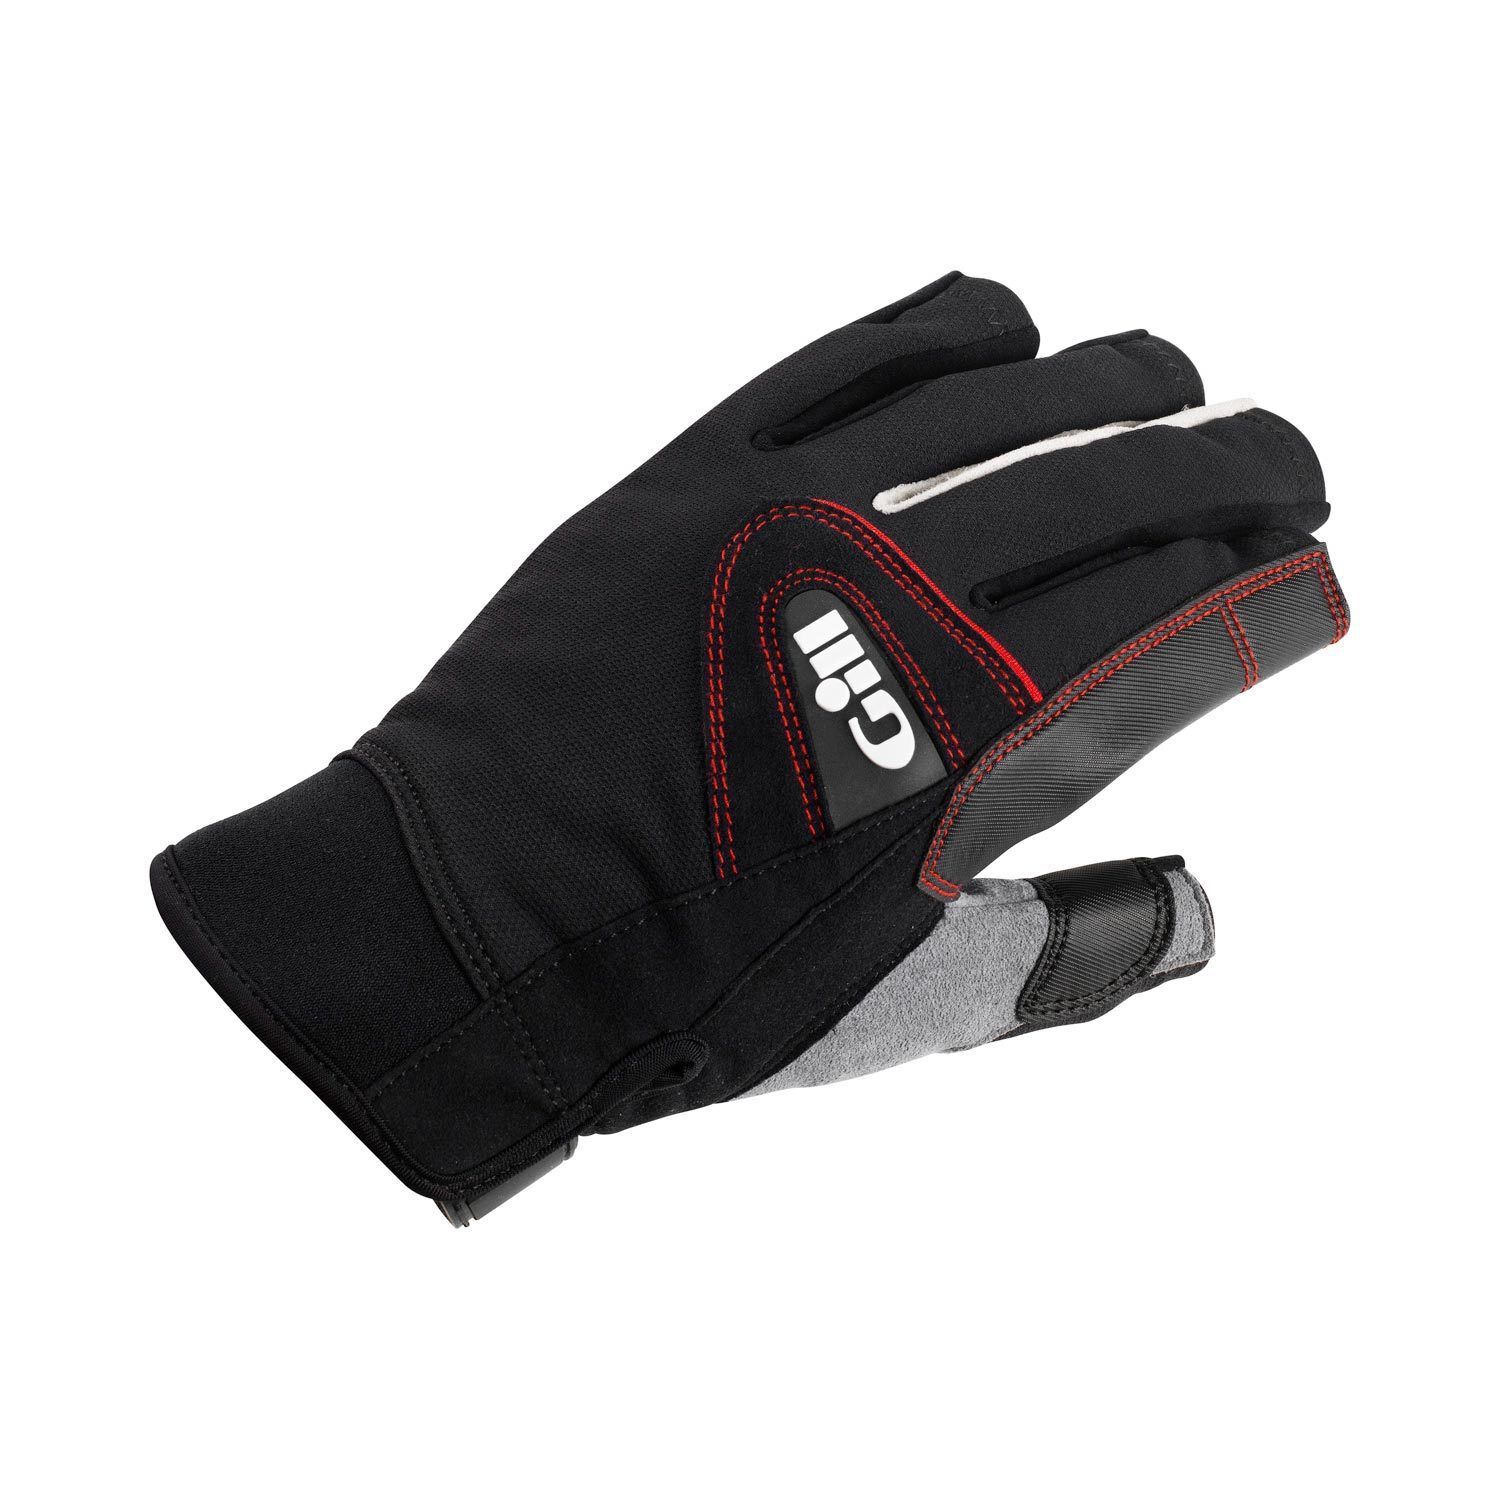 Squall Sailing Event SHORT finger gloves 